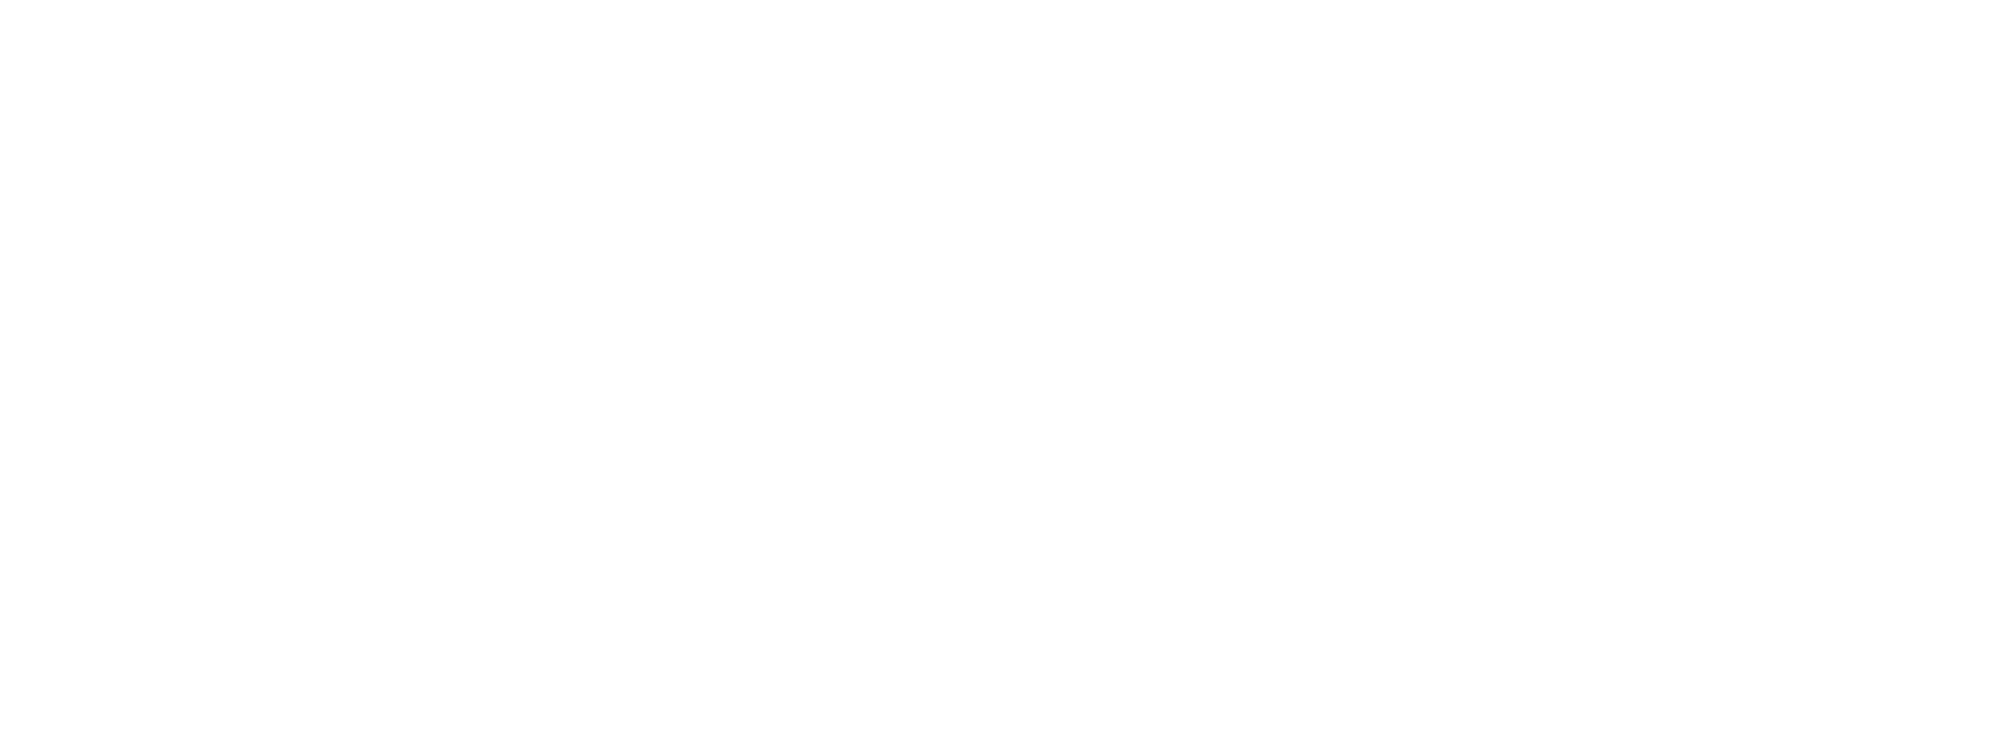 Flasked Liquor Store